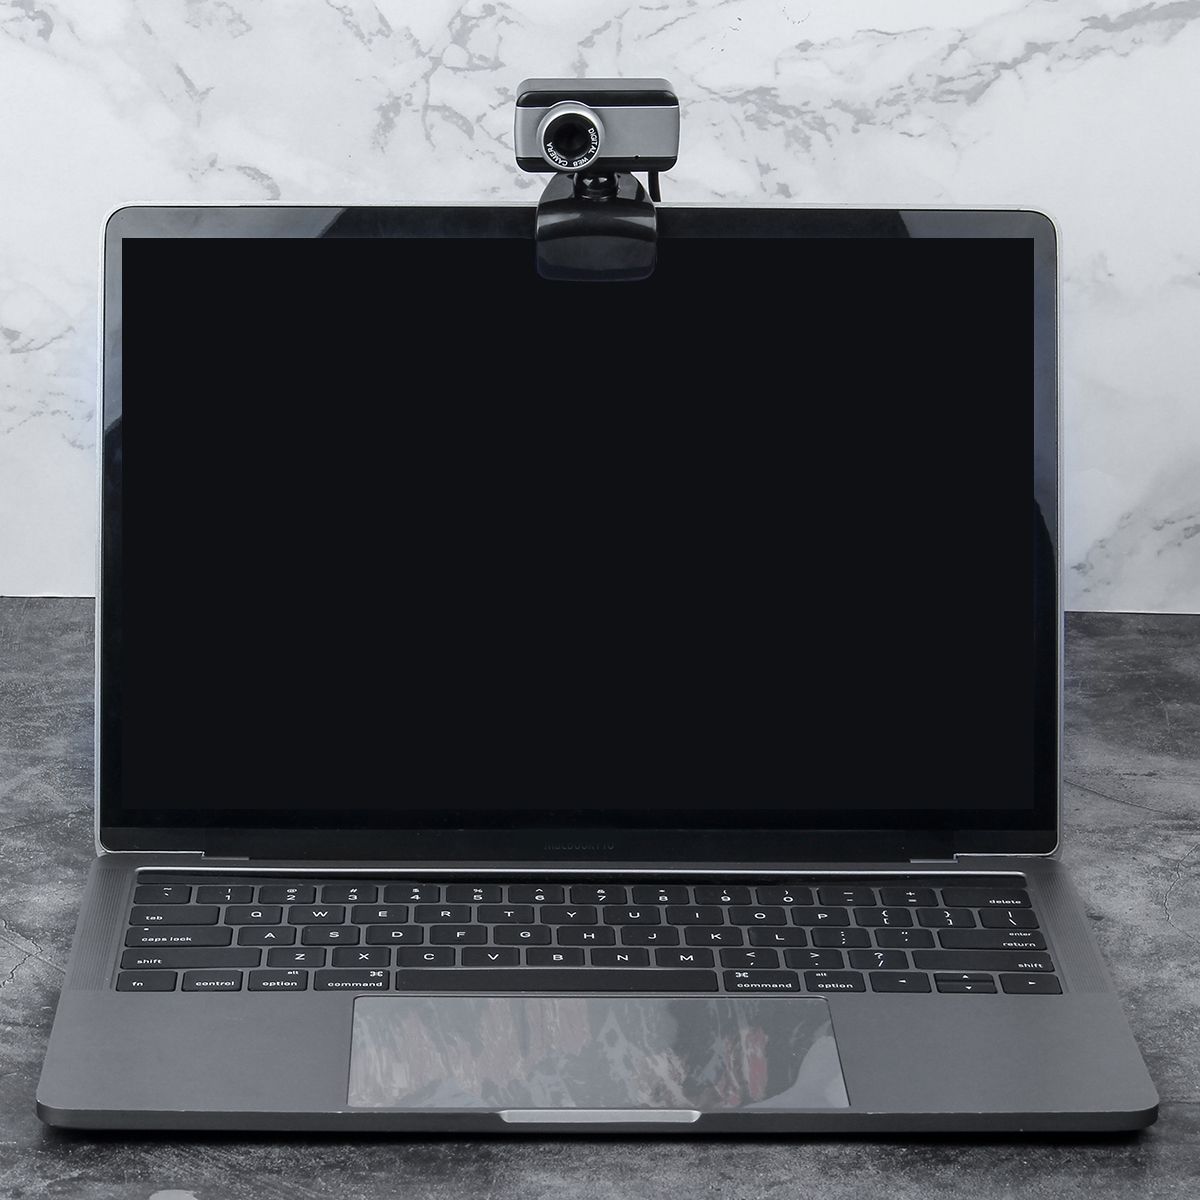 HD-USB-Desktop-Computer-Laptop-Digital-Full-Web-Camera-Webcam-Cam-W-Microphone-1679724